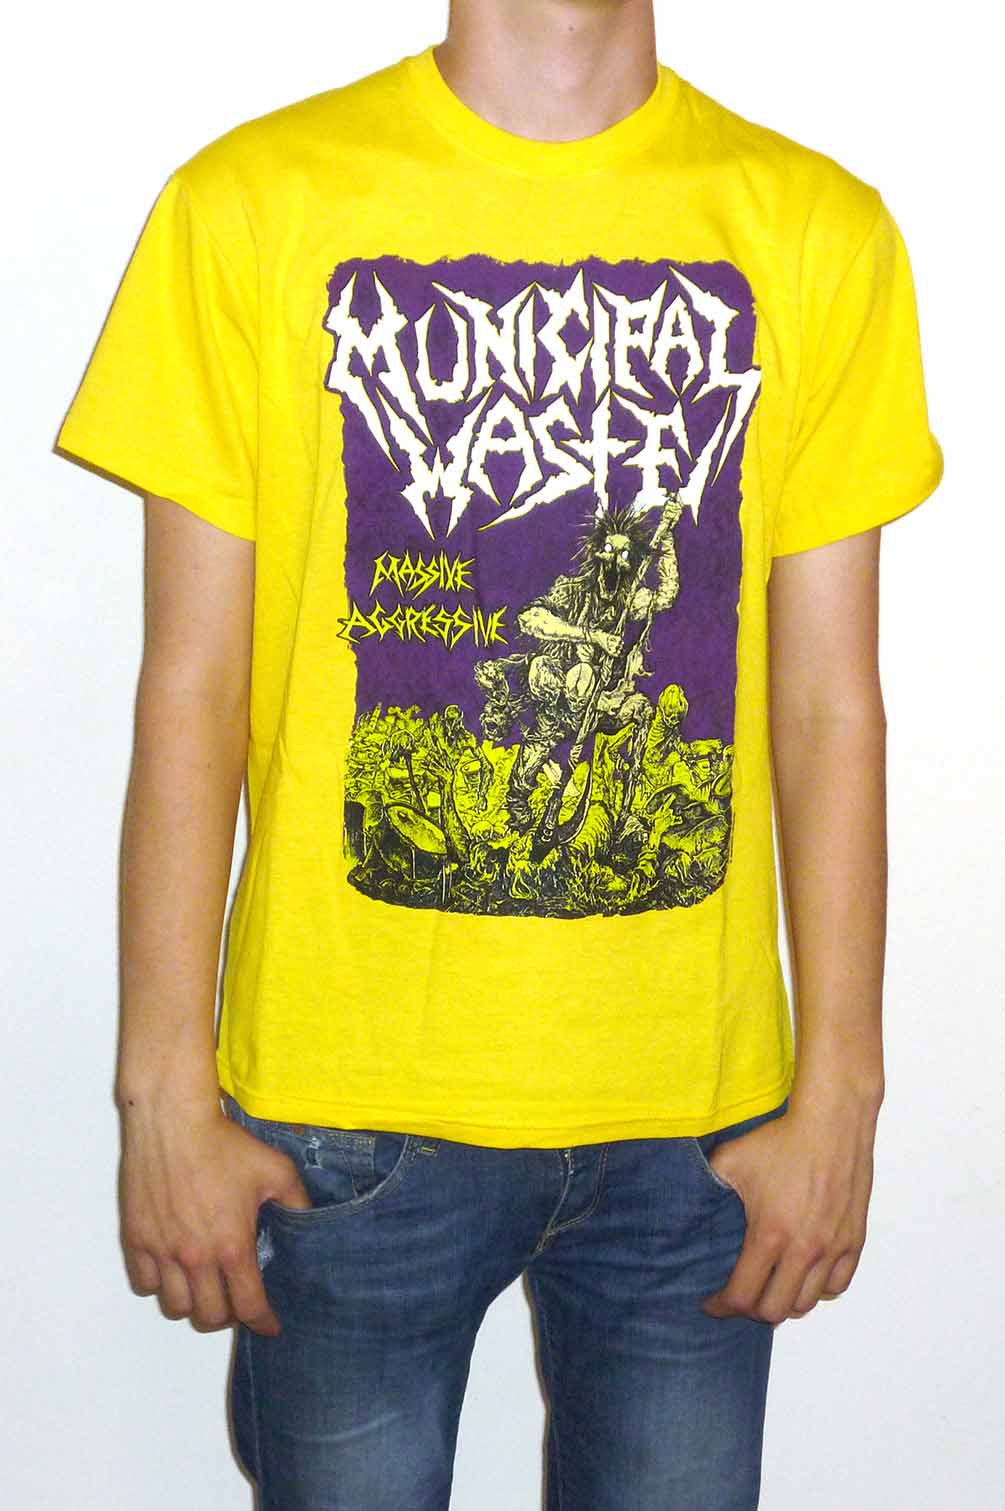 Municipal Waste "Massive Aggressive" Yellow T-shirt